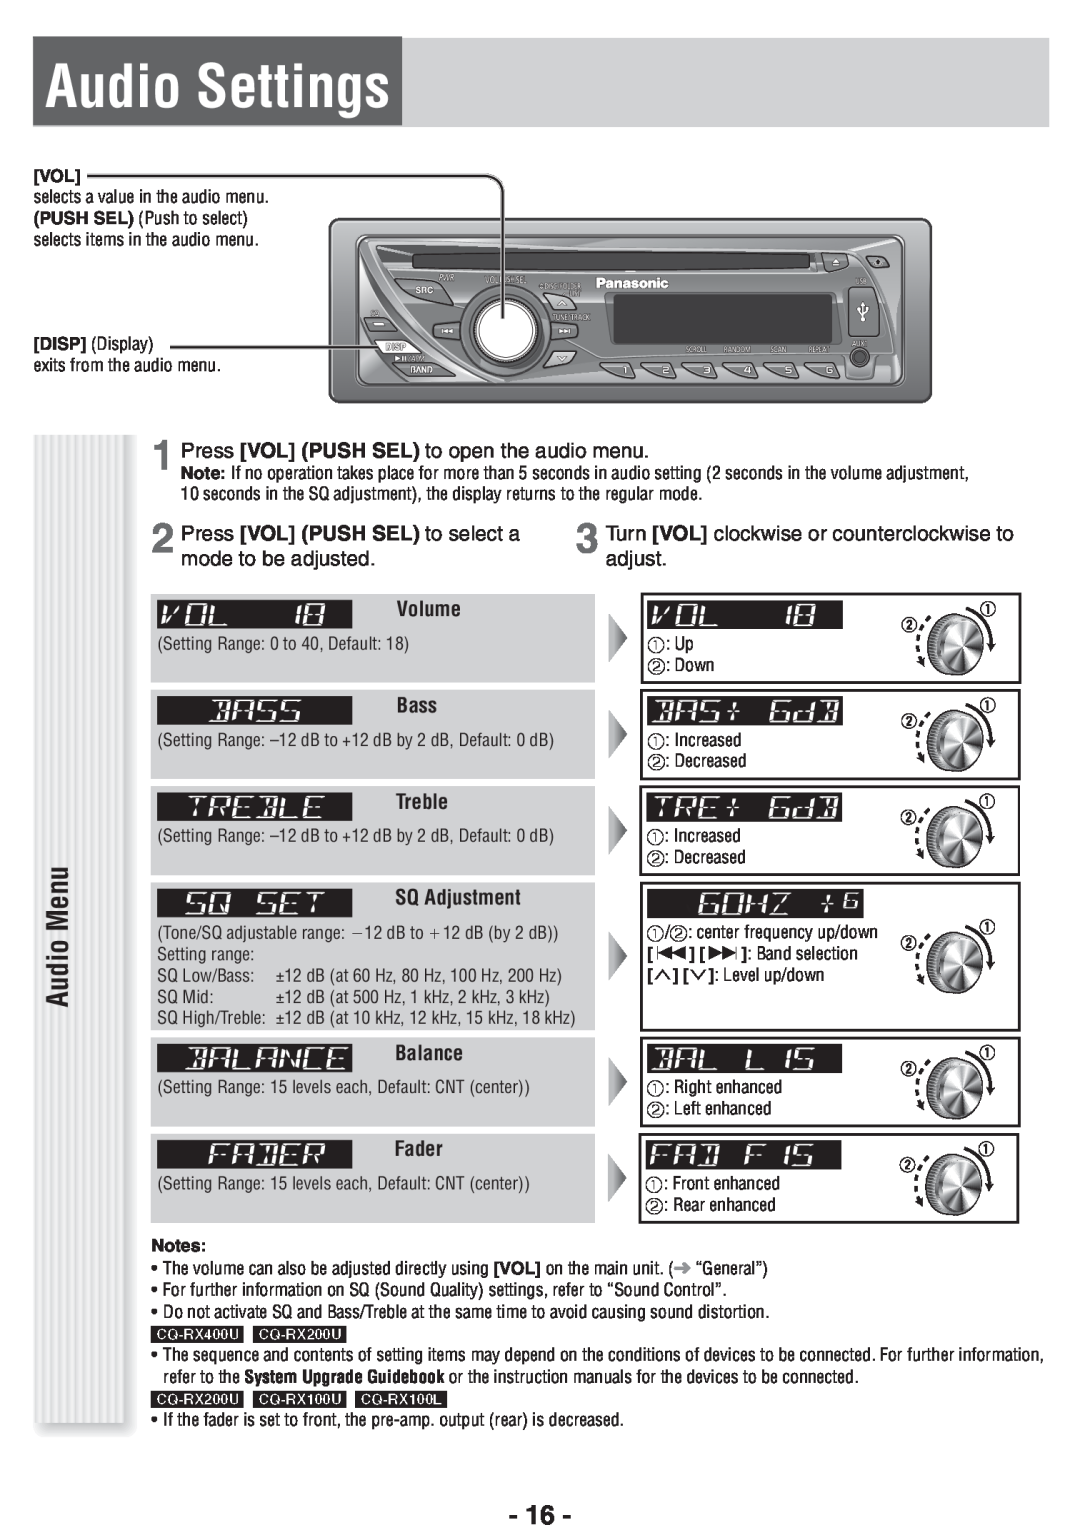 Panasonic CQ-RX400U Audio Settings, Press VOL PUSH SEL to open the audio menu, Press VOL PUSH SEL to select a, adjust 